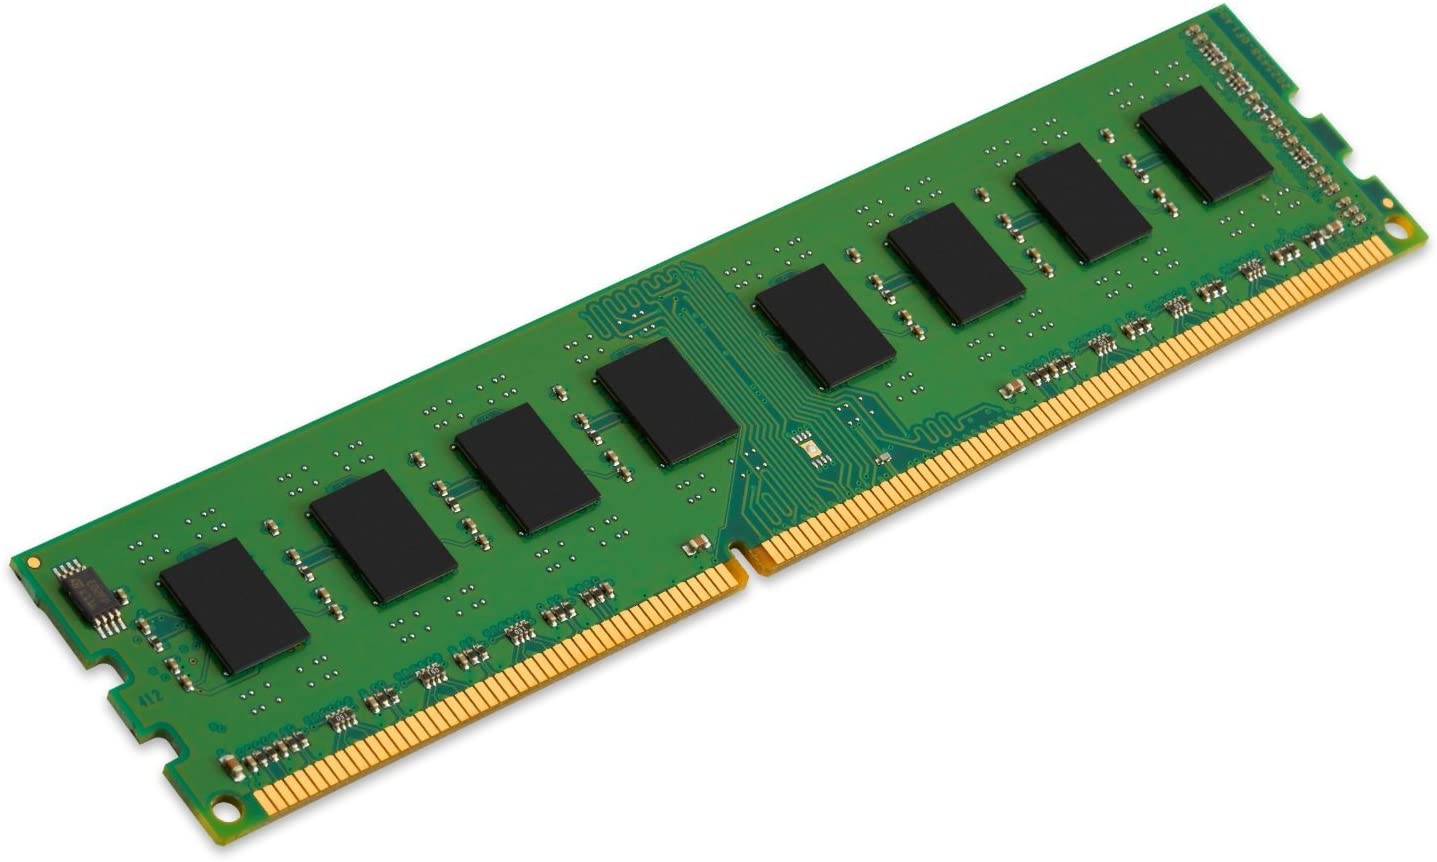 Example RAM card